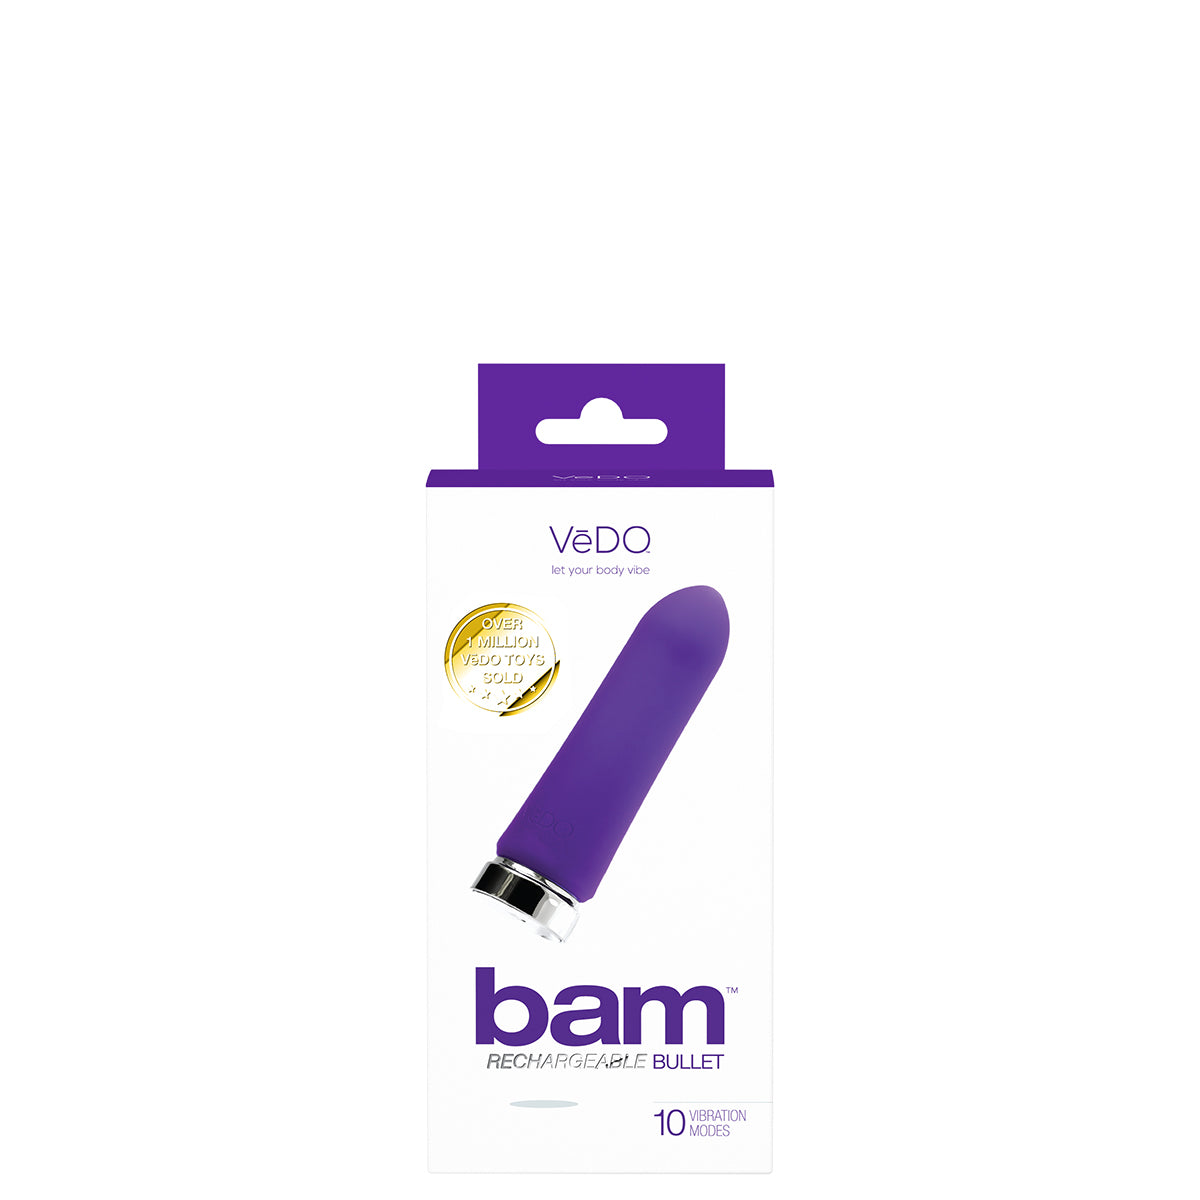 VeDO Bam Bullet - Indigo Intimates Adult Boutique